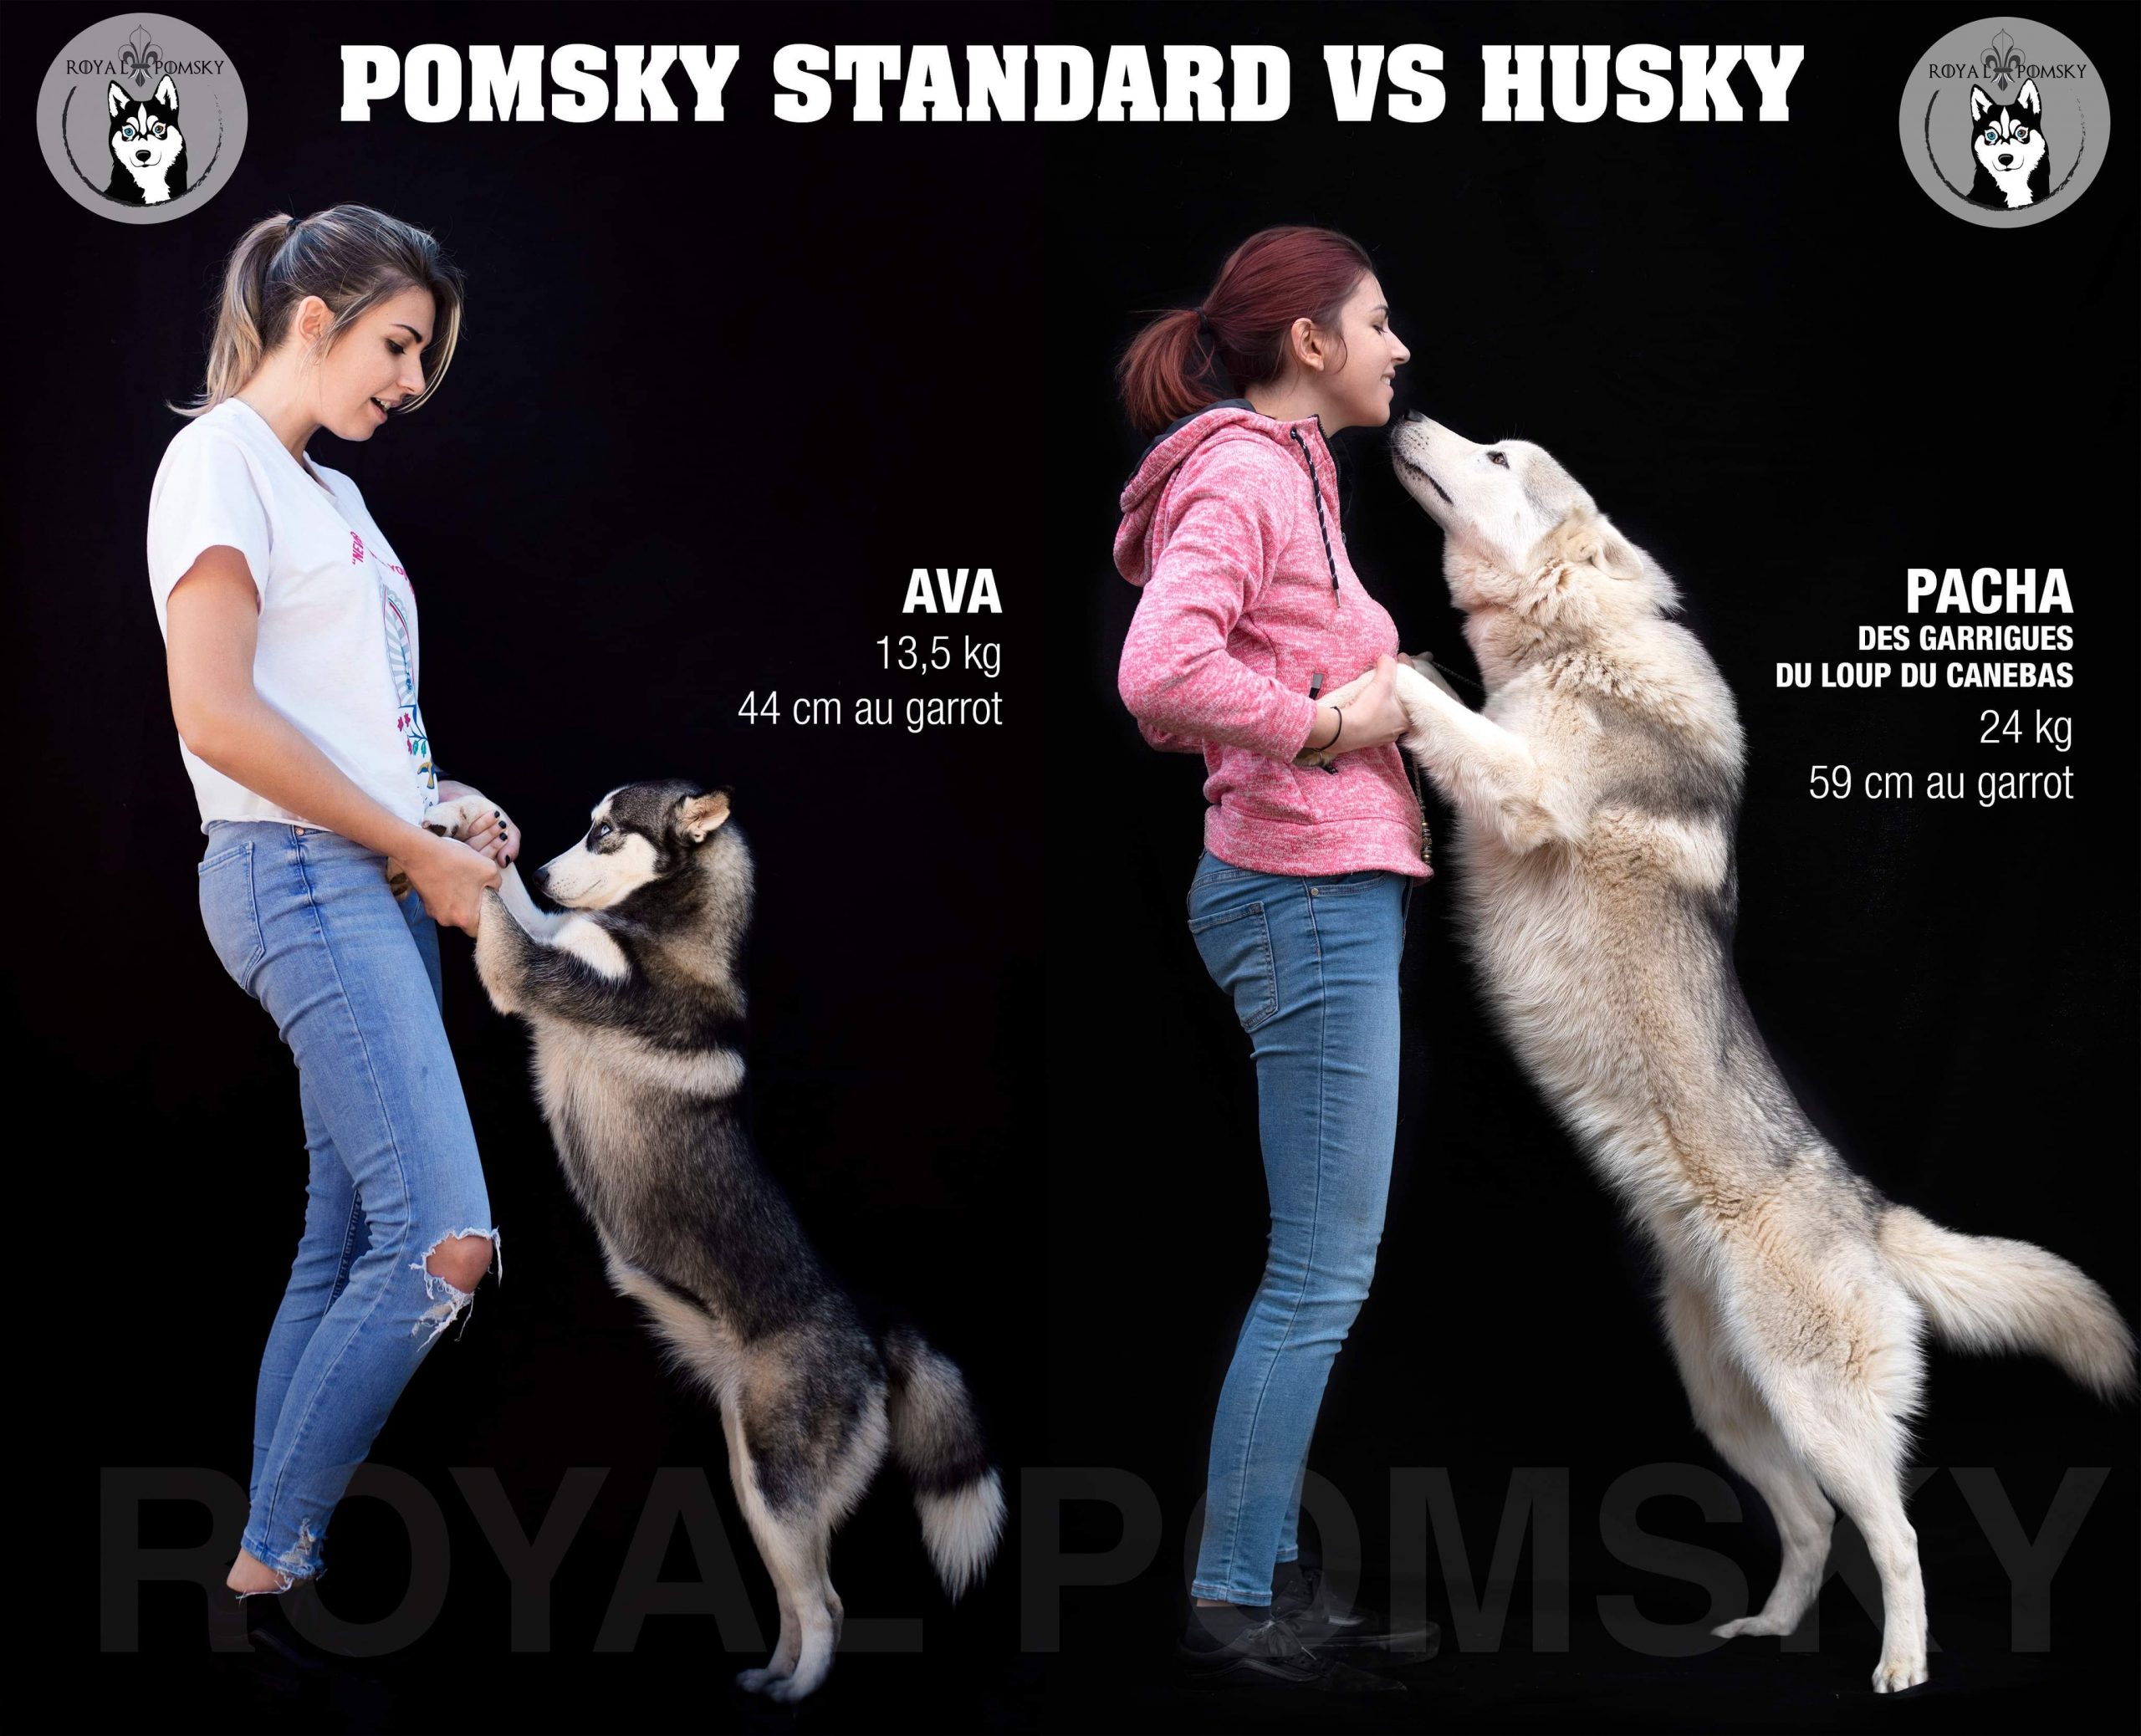 Elevage Pomsky: difference de taille entre un Pomsky standard et un Husky